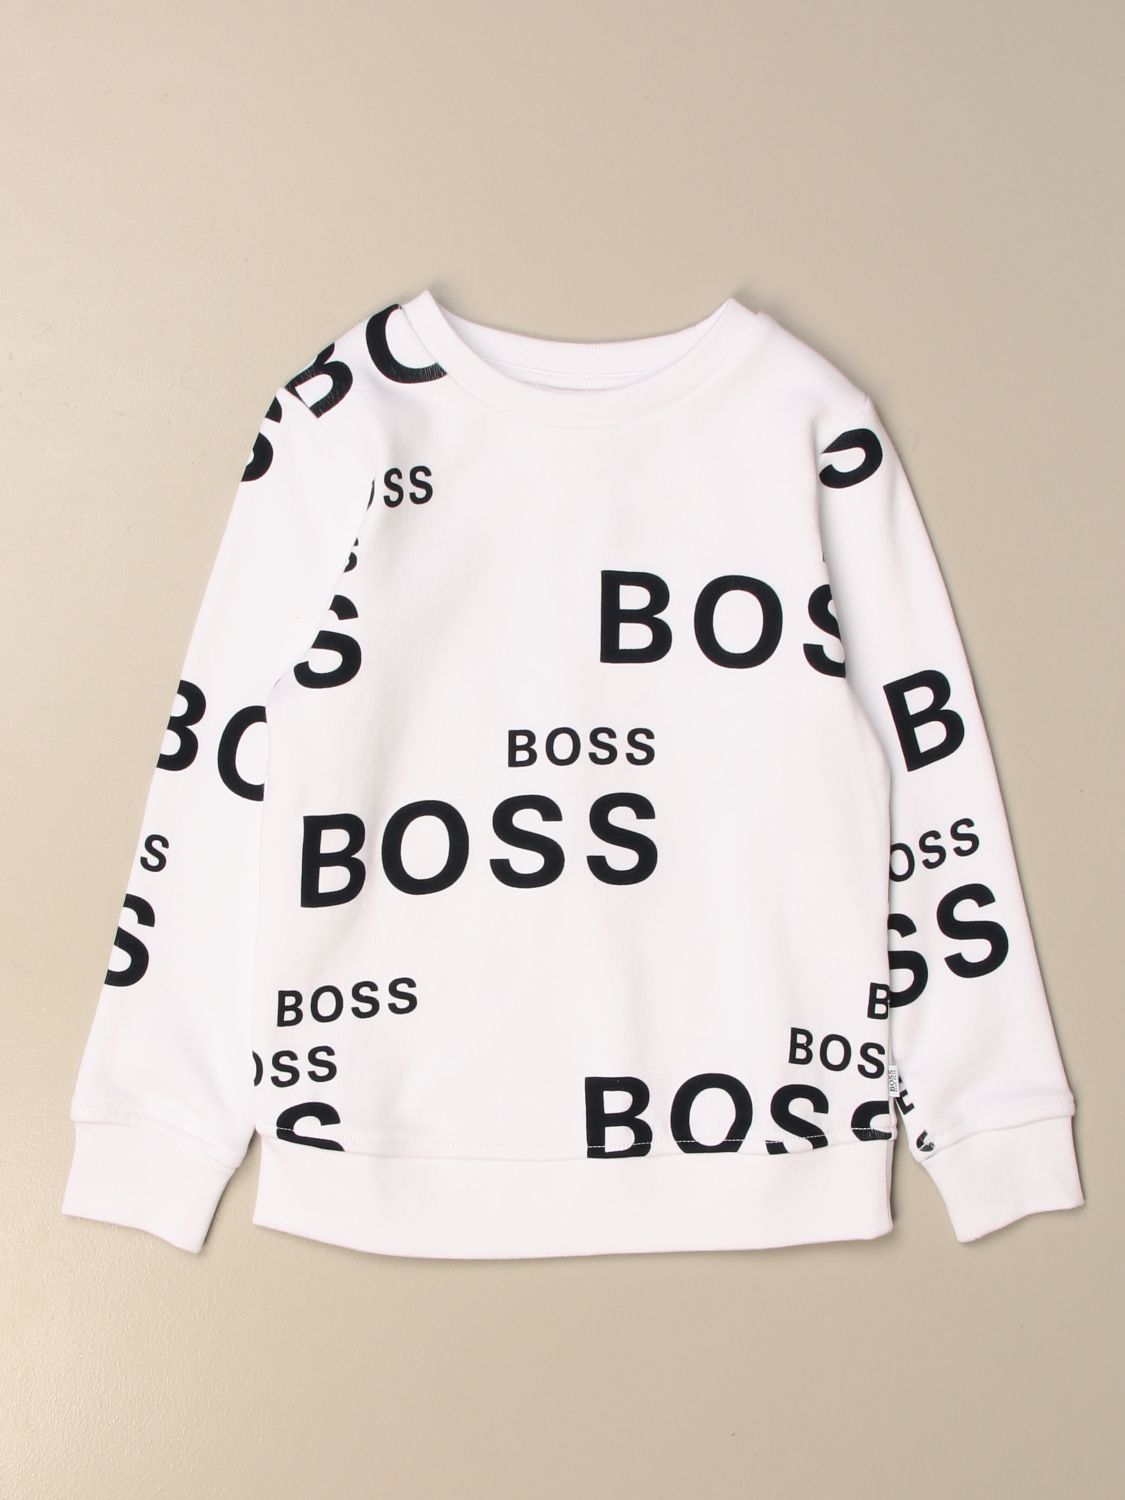 hugo boss boys sweater